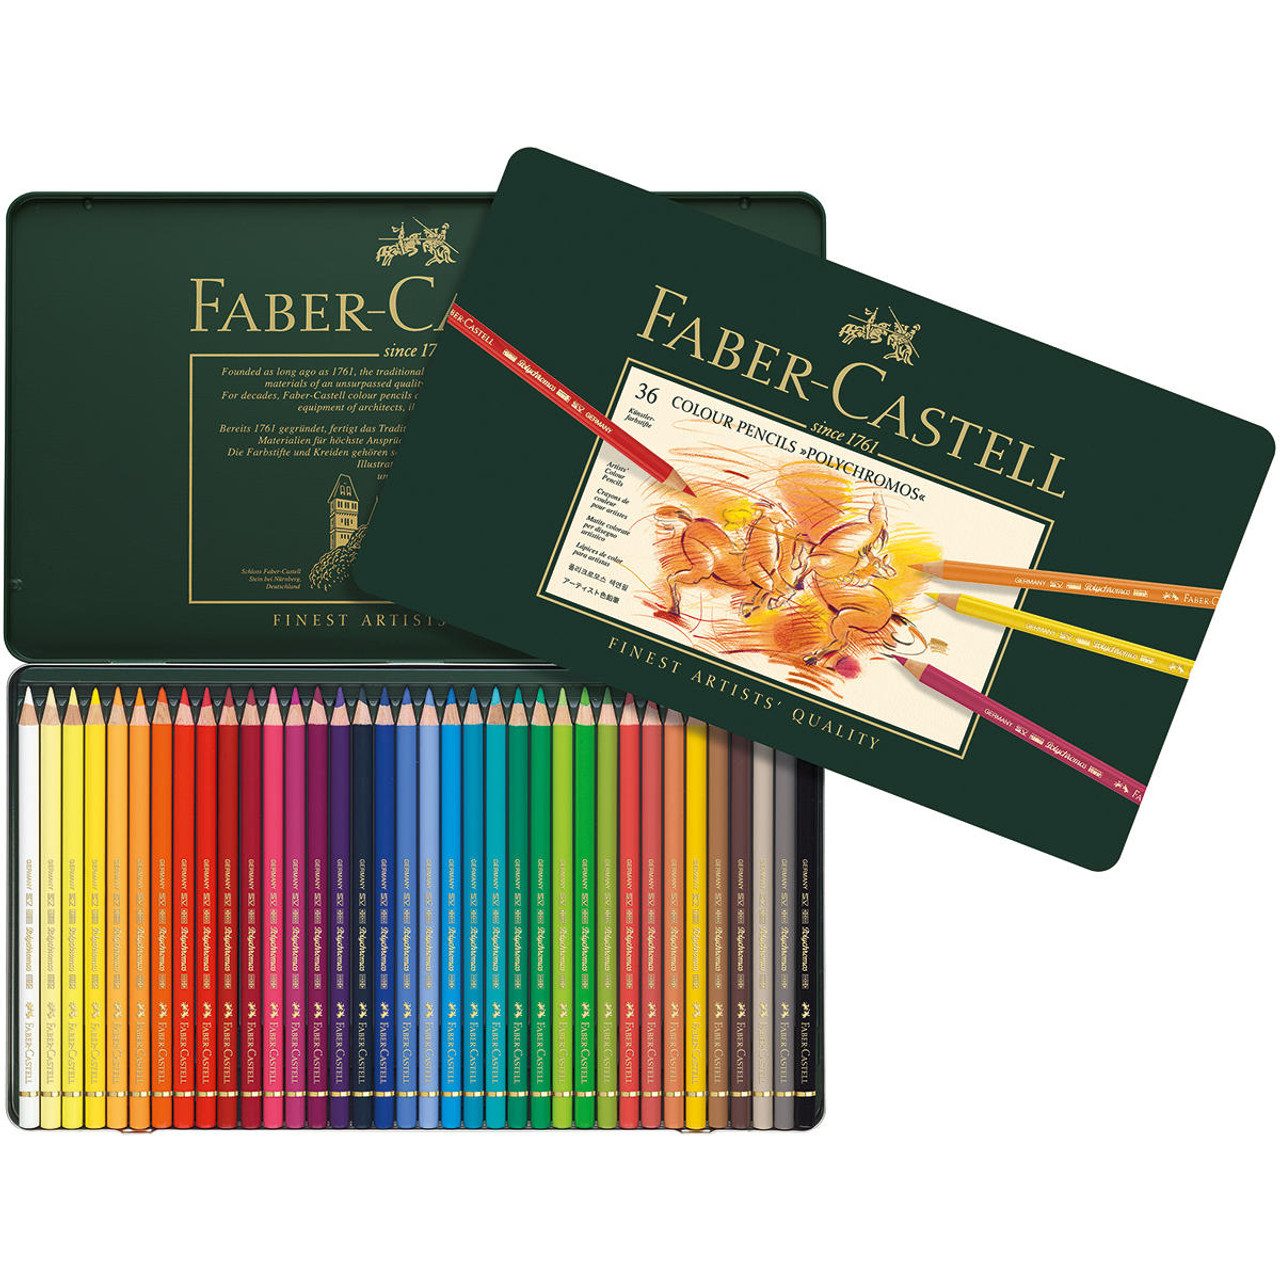 Faber-Castell Creative Studio Watercolor Pan 36 Set